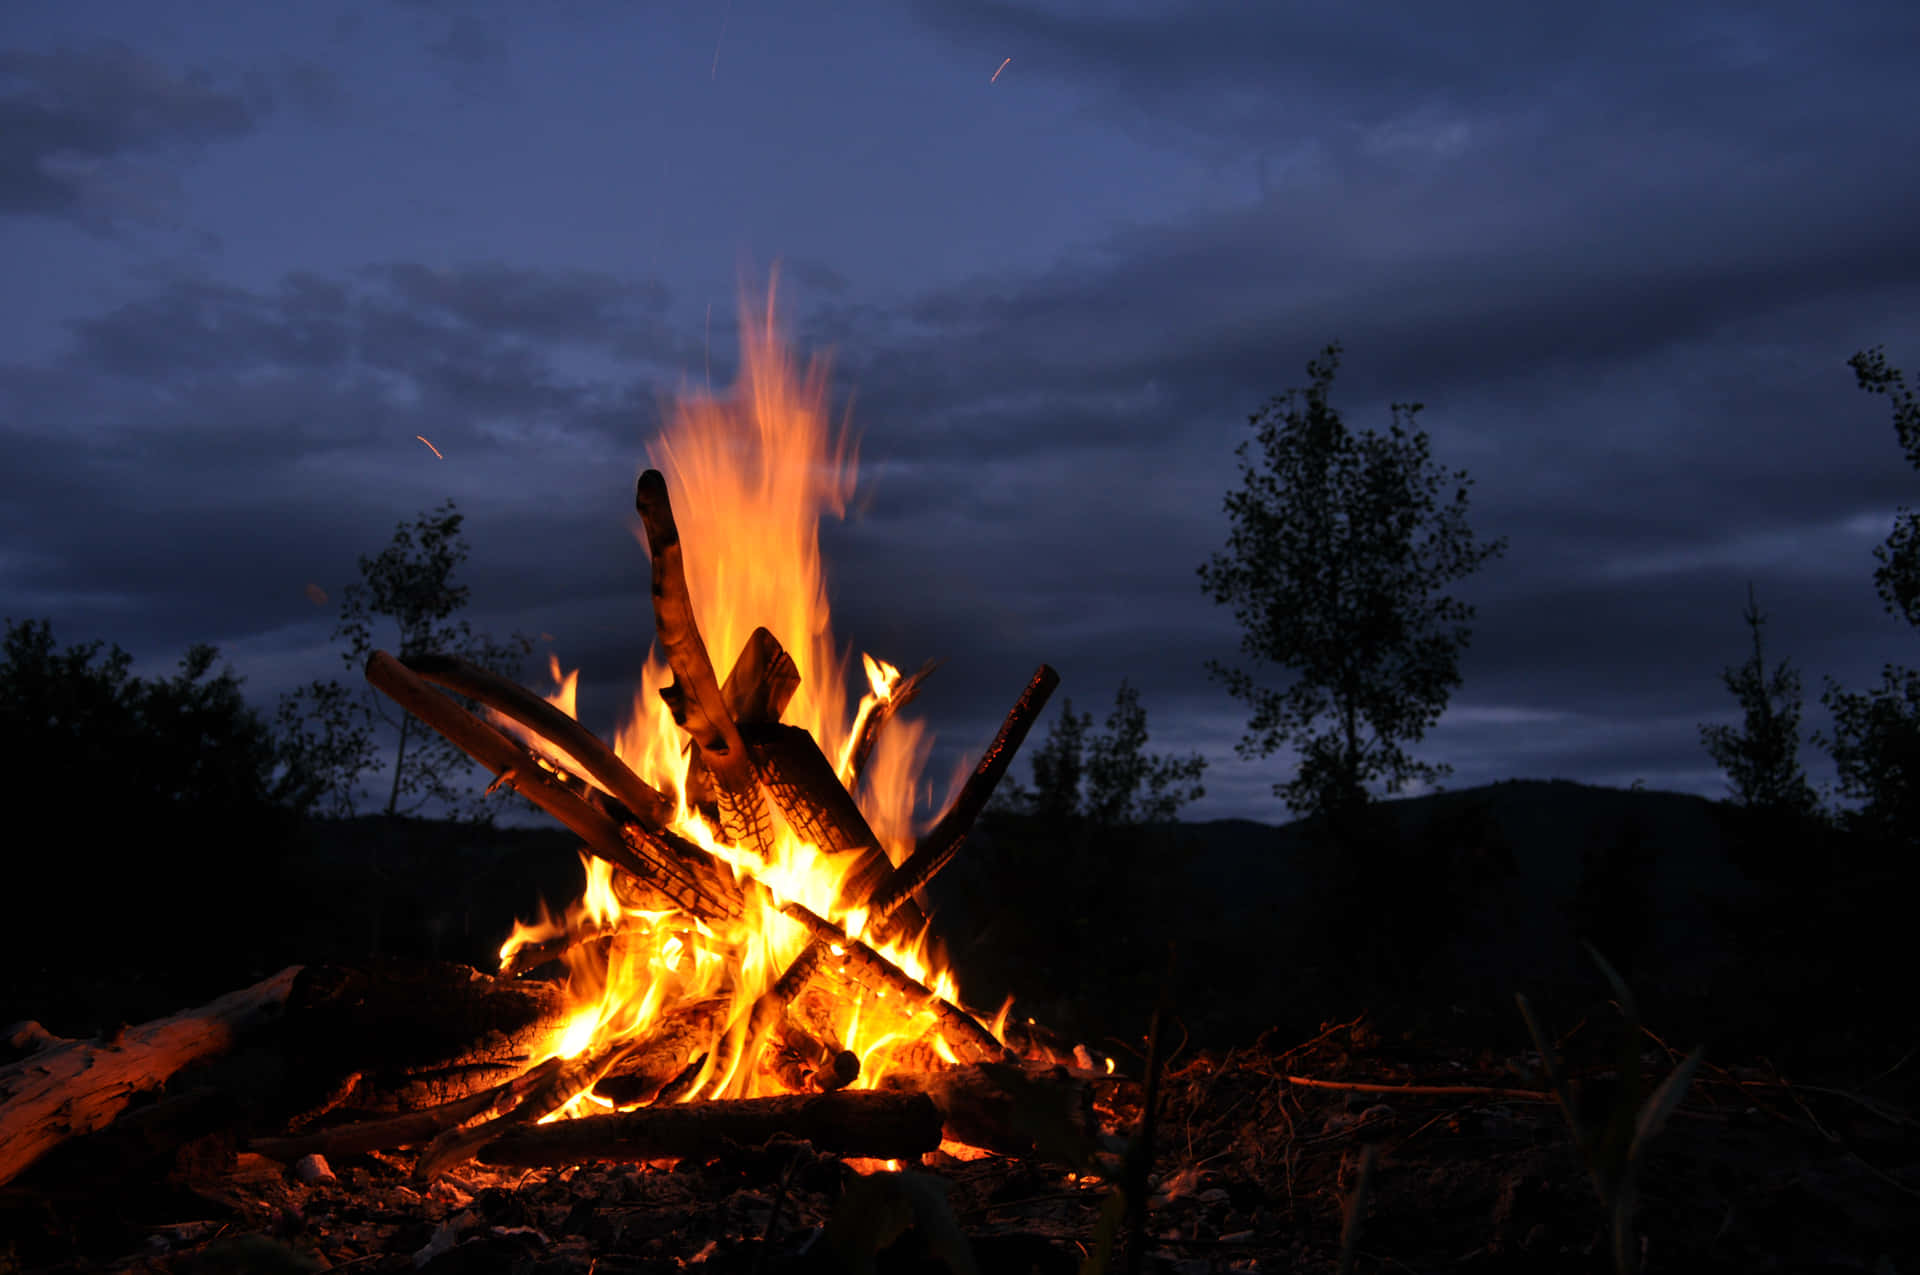 “Gathering Around a Bonfire on a Warm Night”